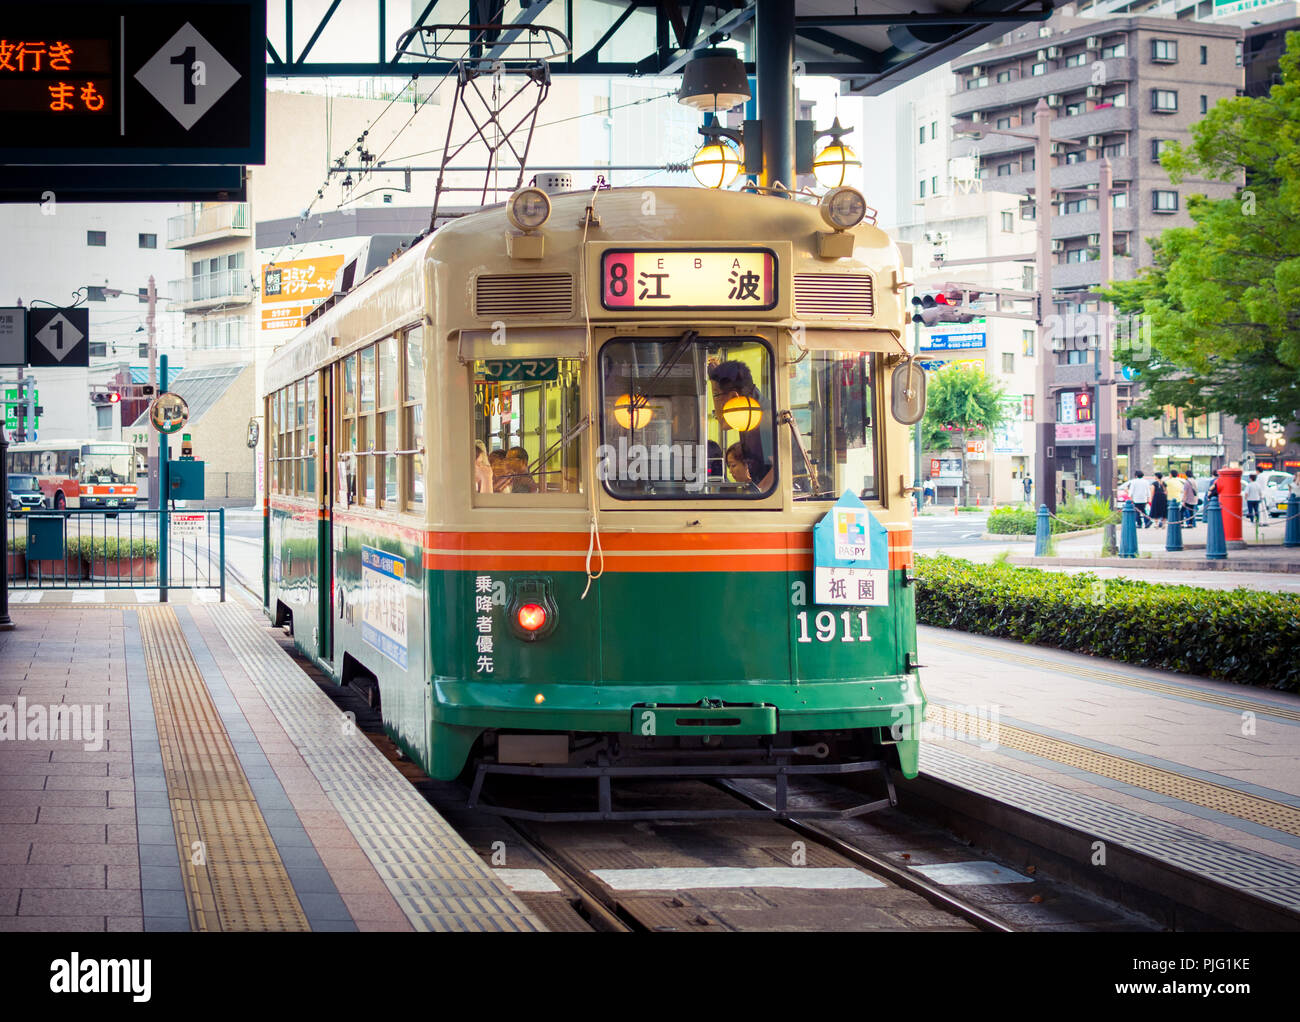 Un tram di Hiroshima (Hiroshima elettrica ferroviaria) a Yokogawa dalla stazione di Hiroshima, Giappone. Foto Stock